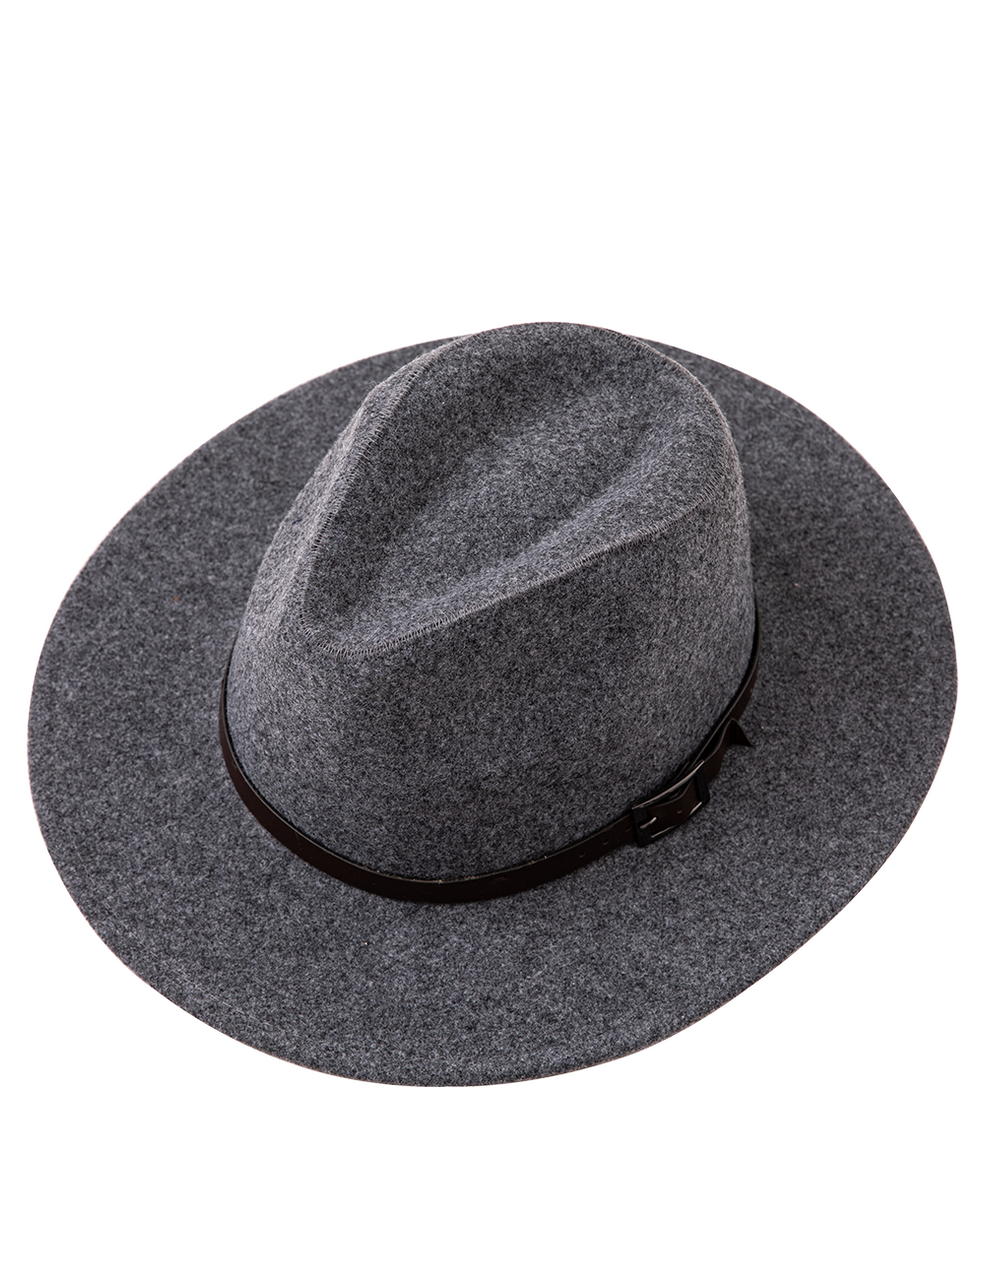 Felt Fedora Hat wit Leather Belt (KH070-47)